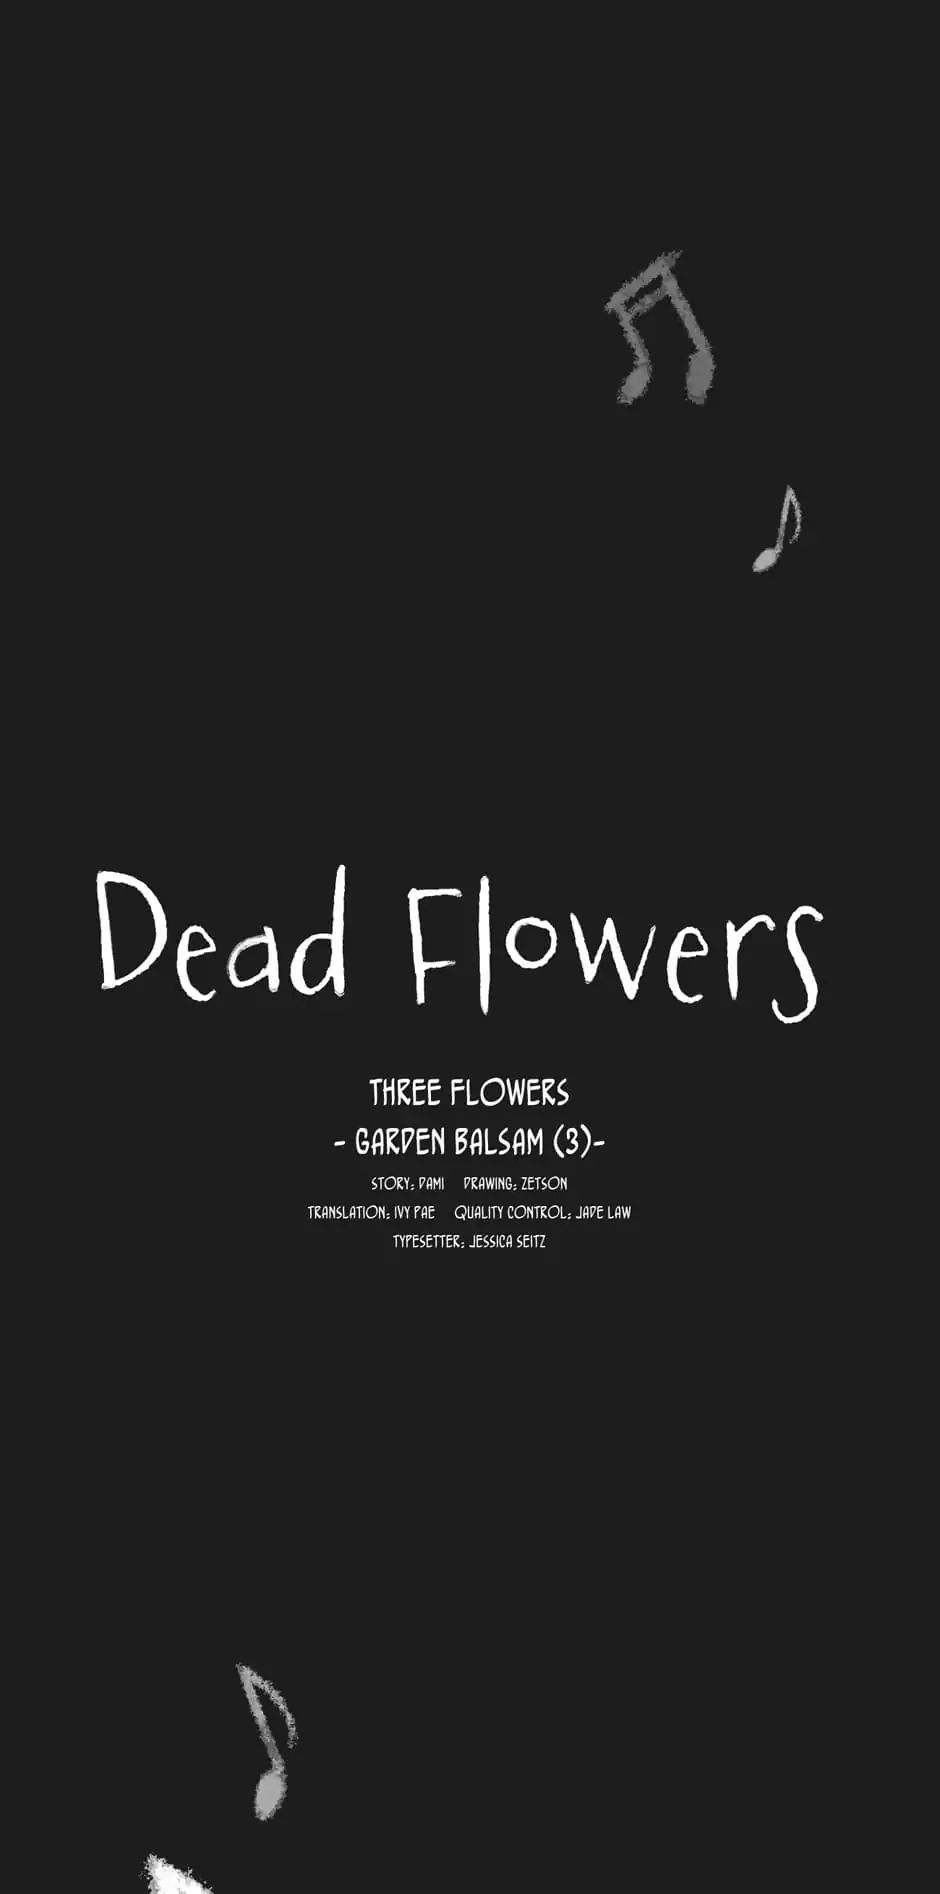 Dead Flowers Chapter 3: Three Flowers - Garden Balsam (3) - Picture 1